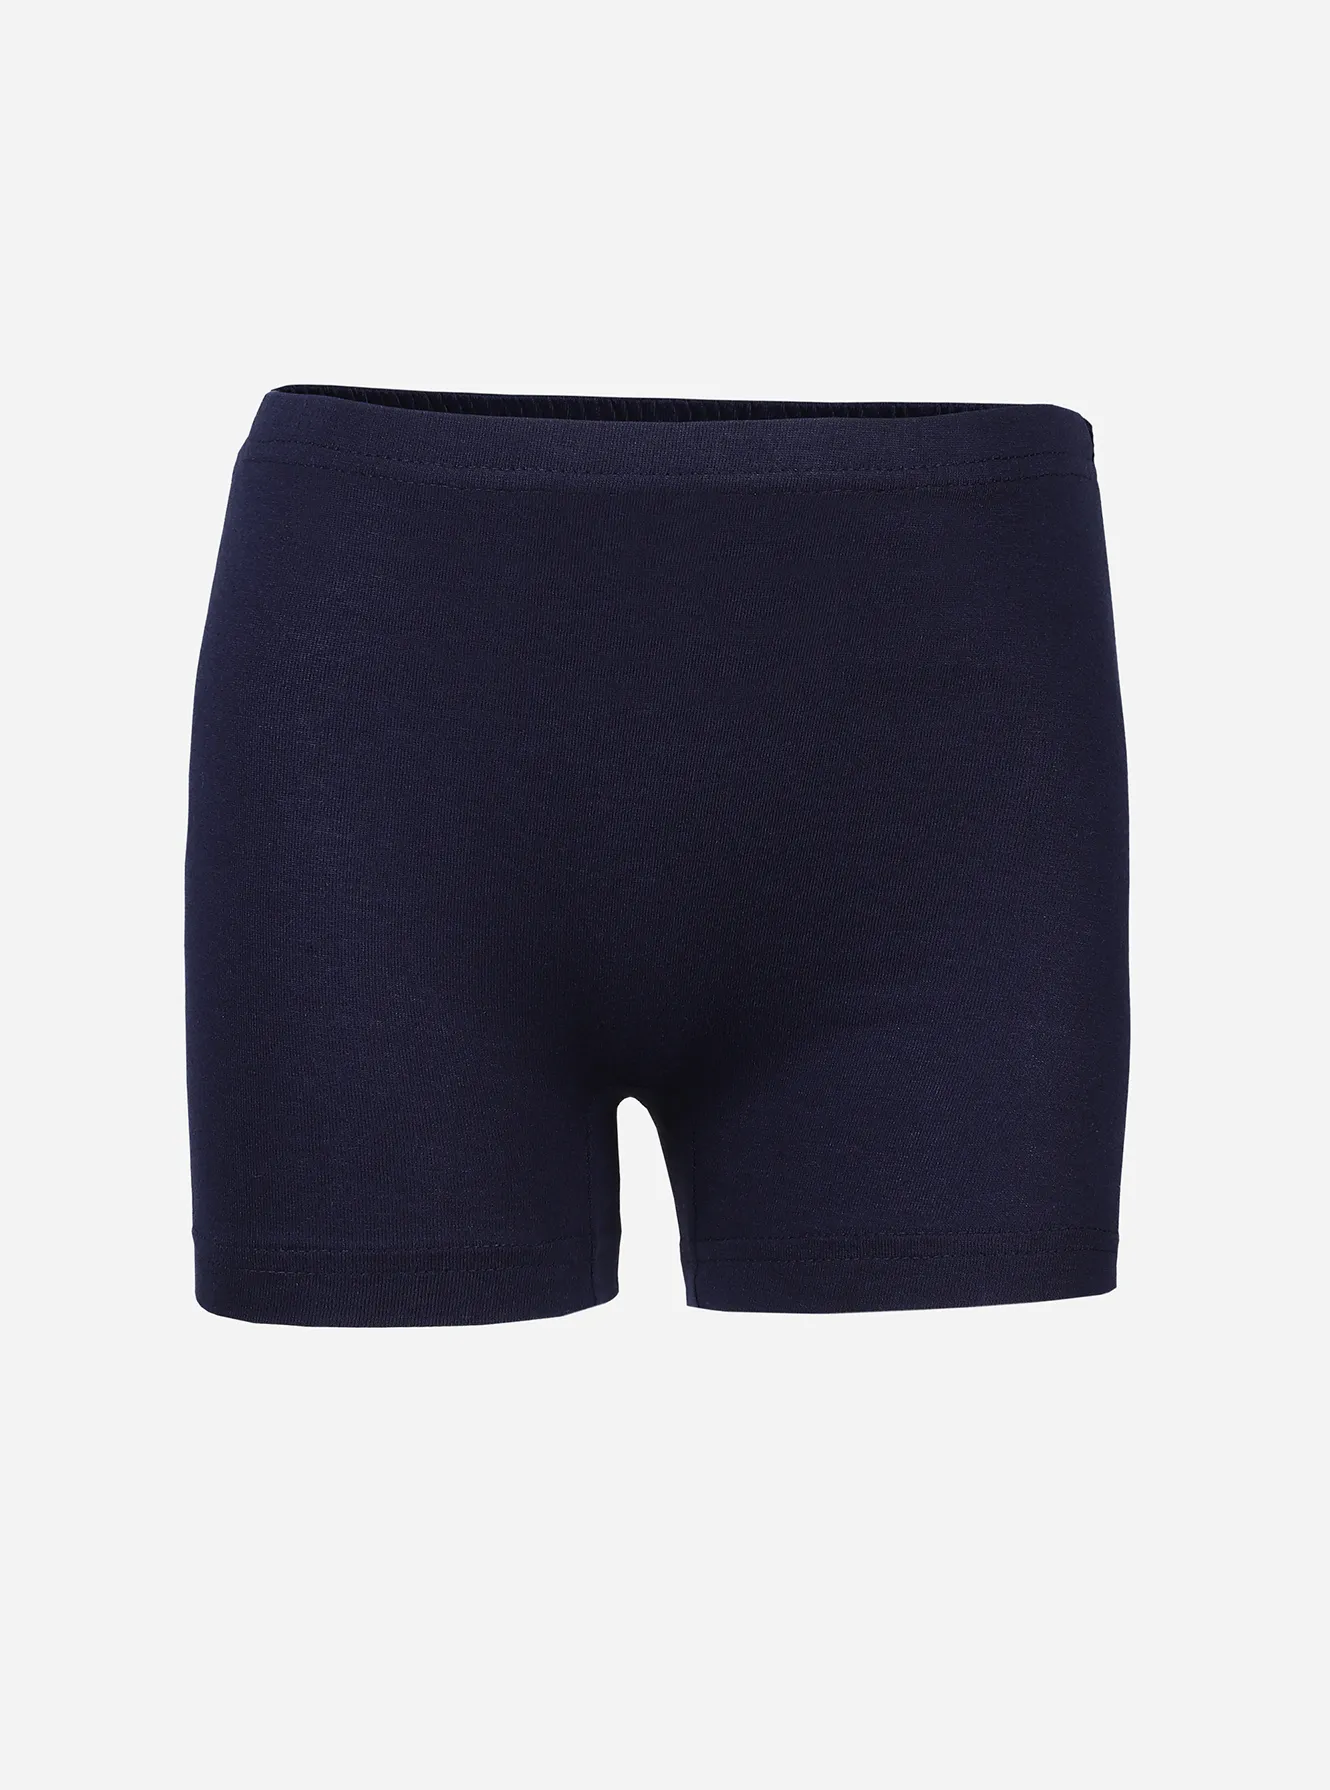 Premium cotton long leg panty - Pack of 3, Buy Mens & Kids Innerwear